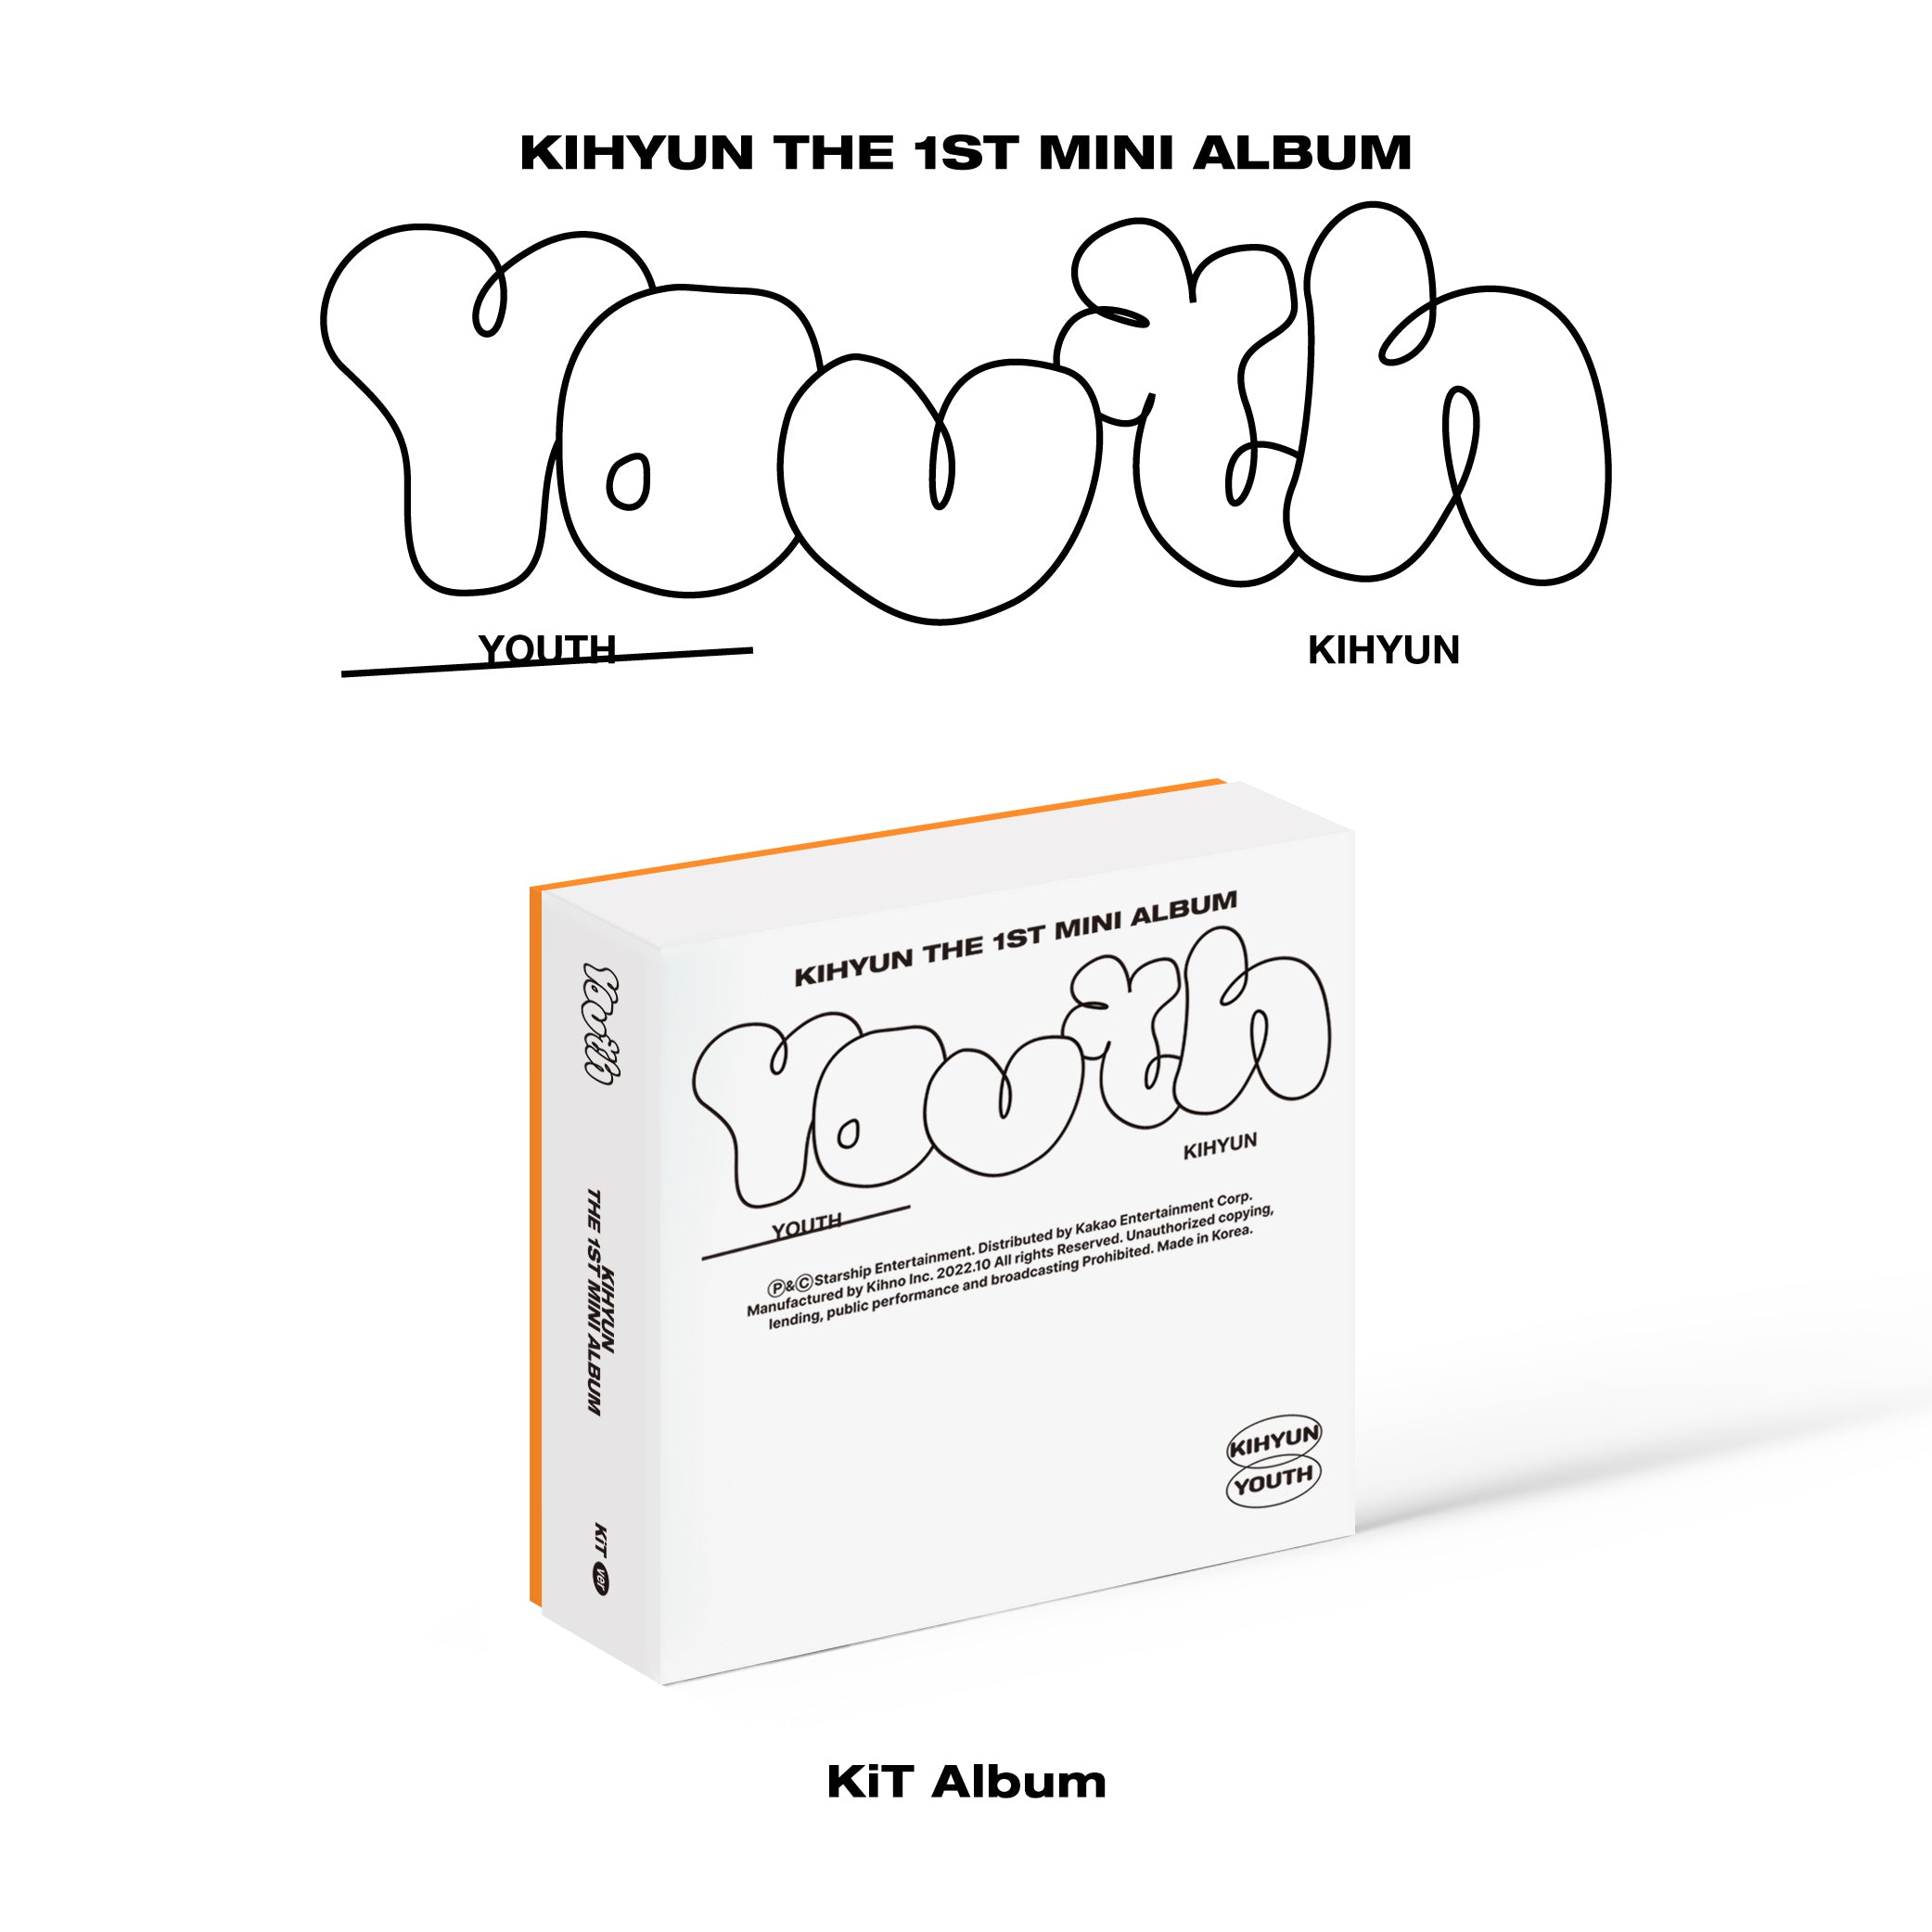 KIHYUN (MONSTA X) - YOUTH (KiT Album)